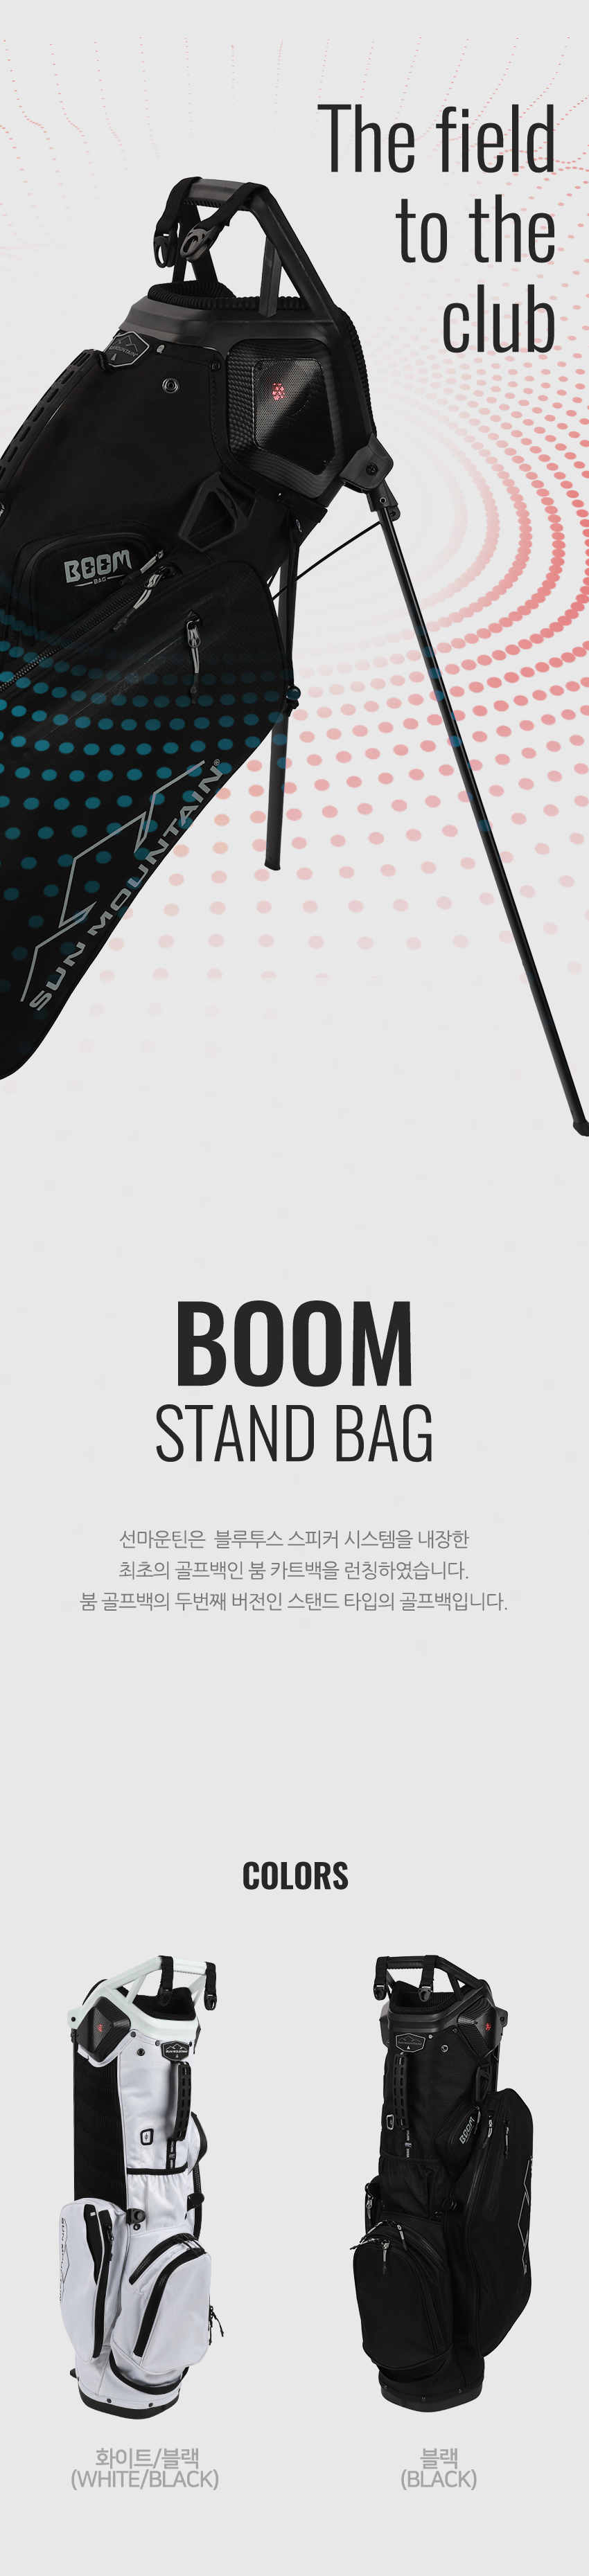 sunmountain_boom_stand_bag_all_black_detail_03.jpg